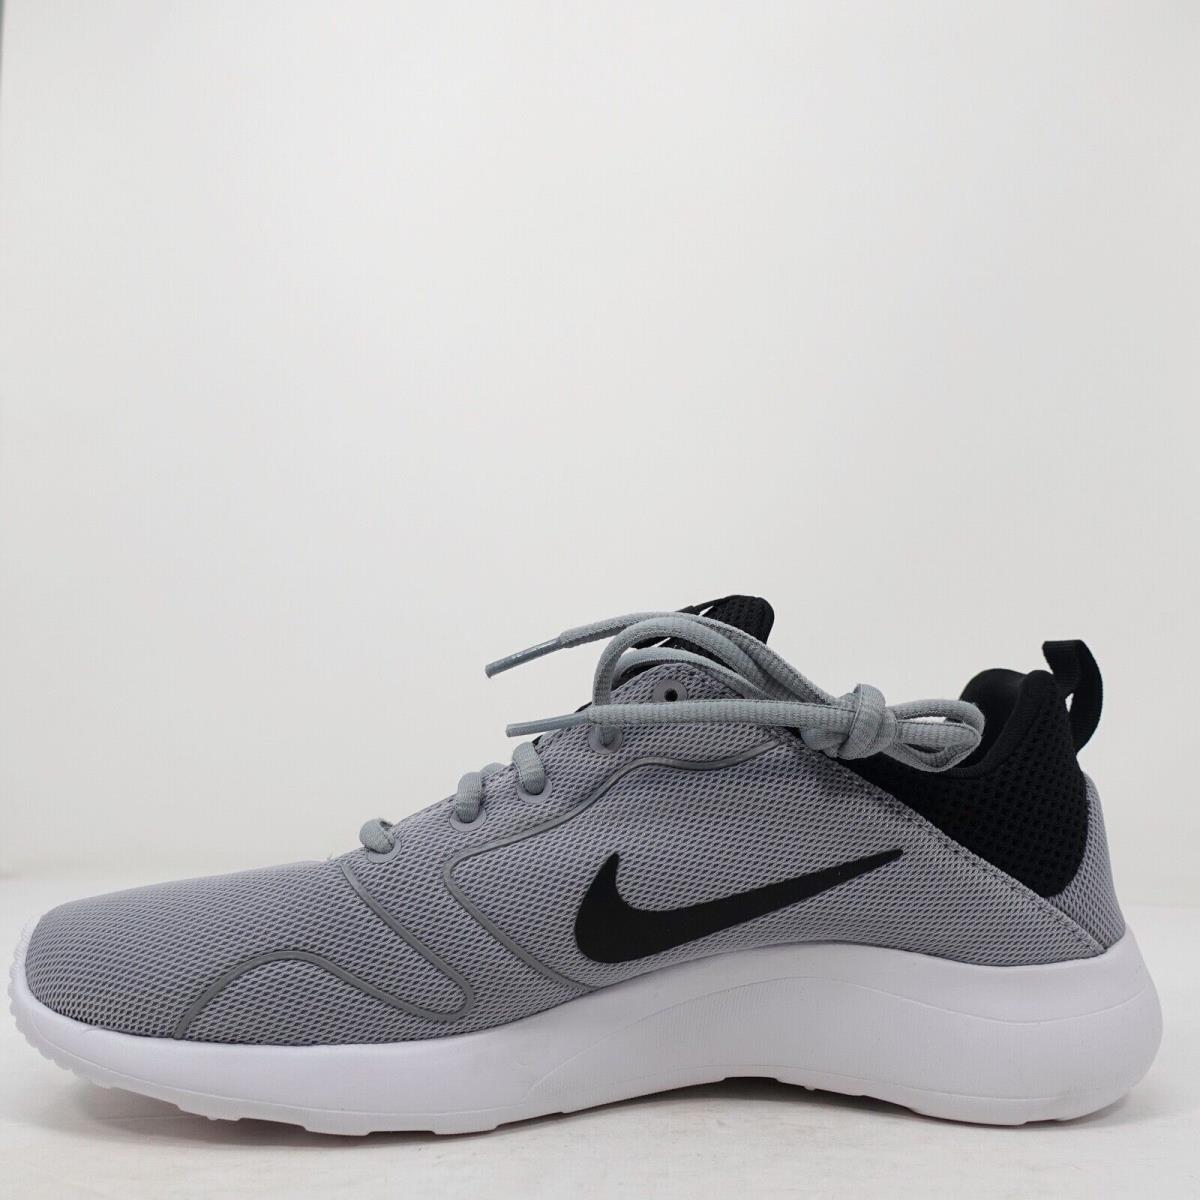 Souvenir tire debt Nike Kaishi 2.0 Grey Gray Black White Sneakers Shoes Men`s Size 9.5 |  883212108500 - Nike shoes Kaishi - Gray | SporTipTop